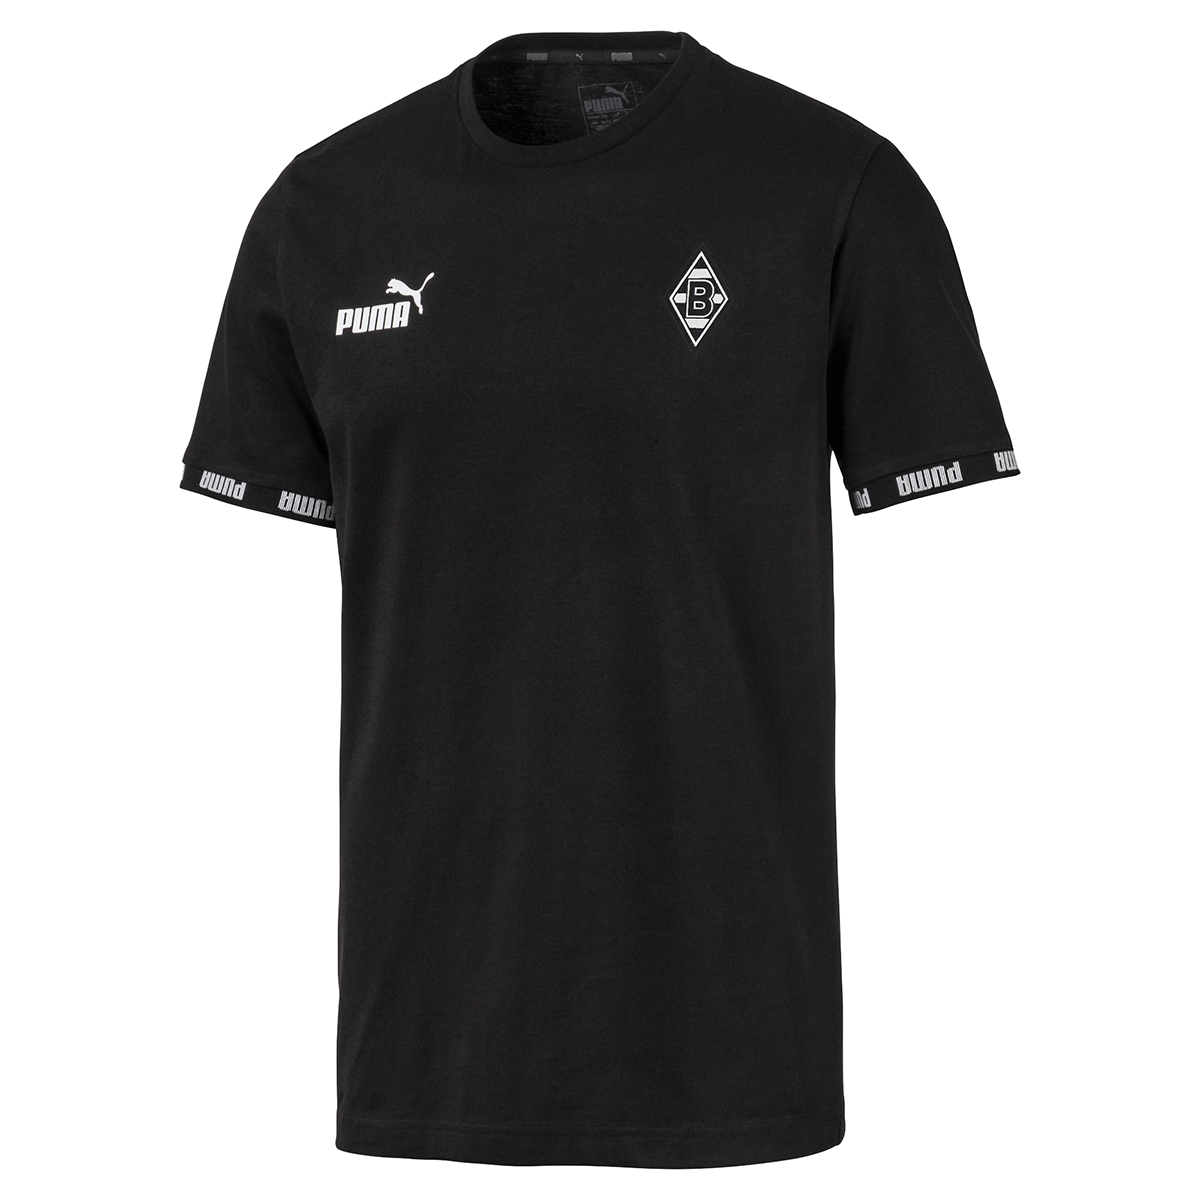 Puma Herren BMG FtblCulture Tee Borussia Mönchengladbach Shirt 756167